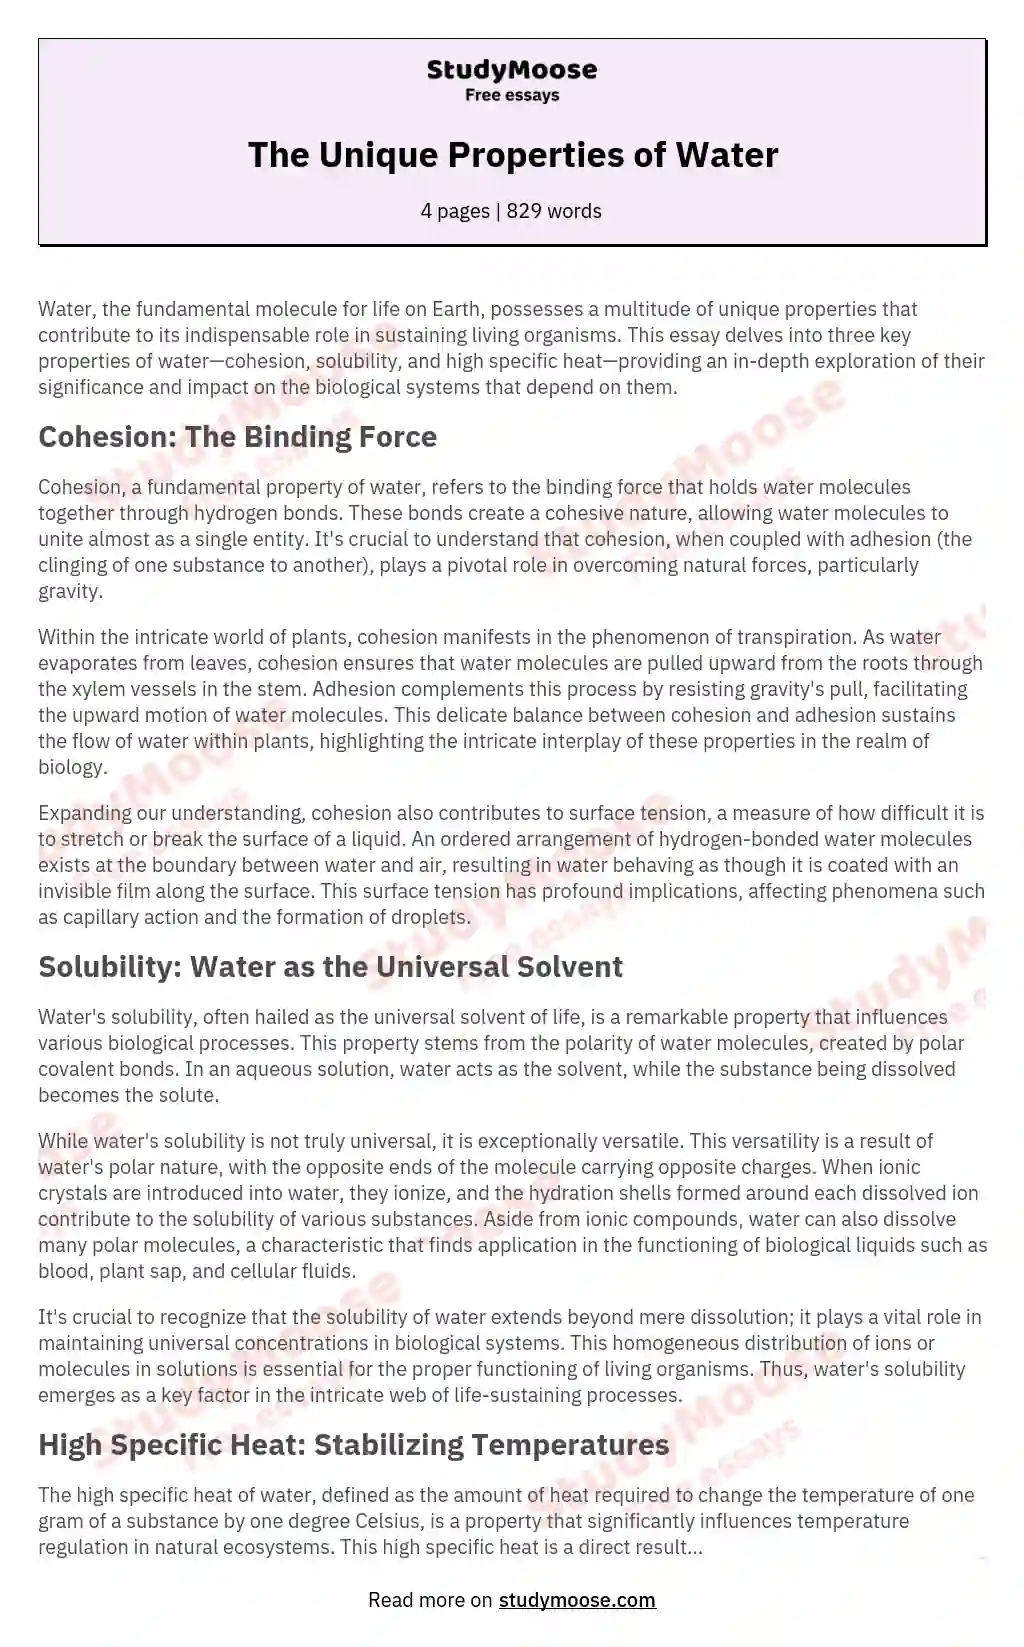 The Unique Properties of Water essay